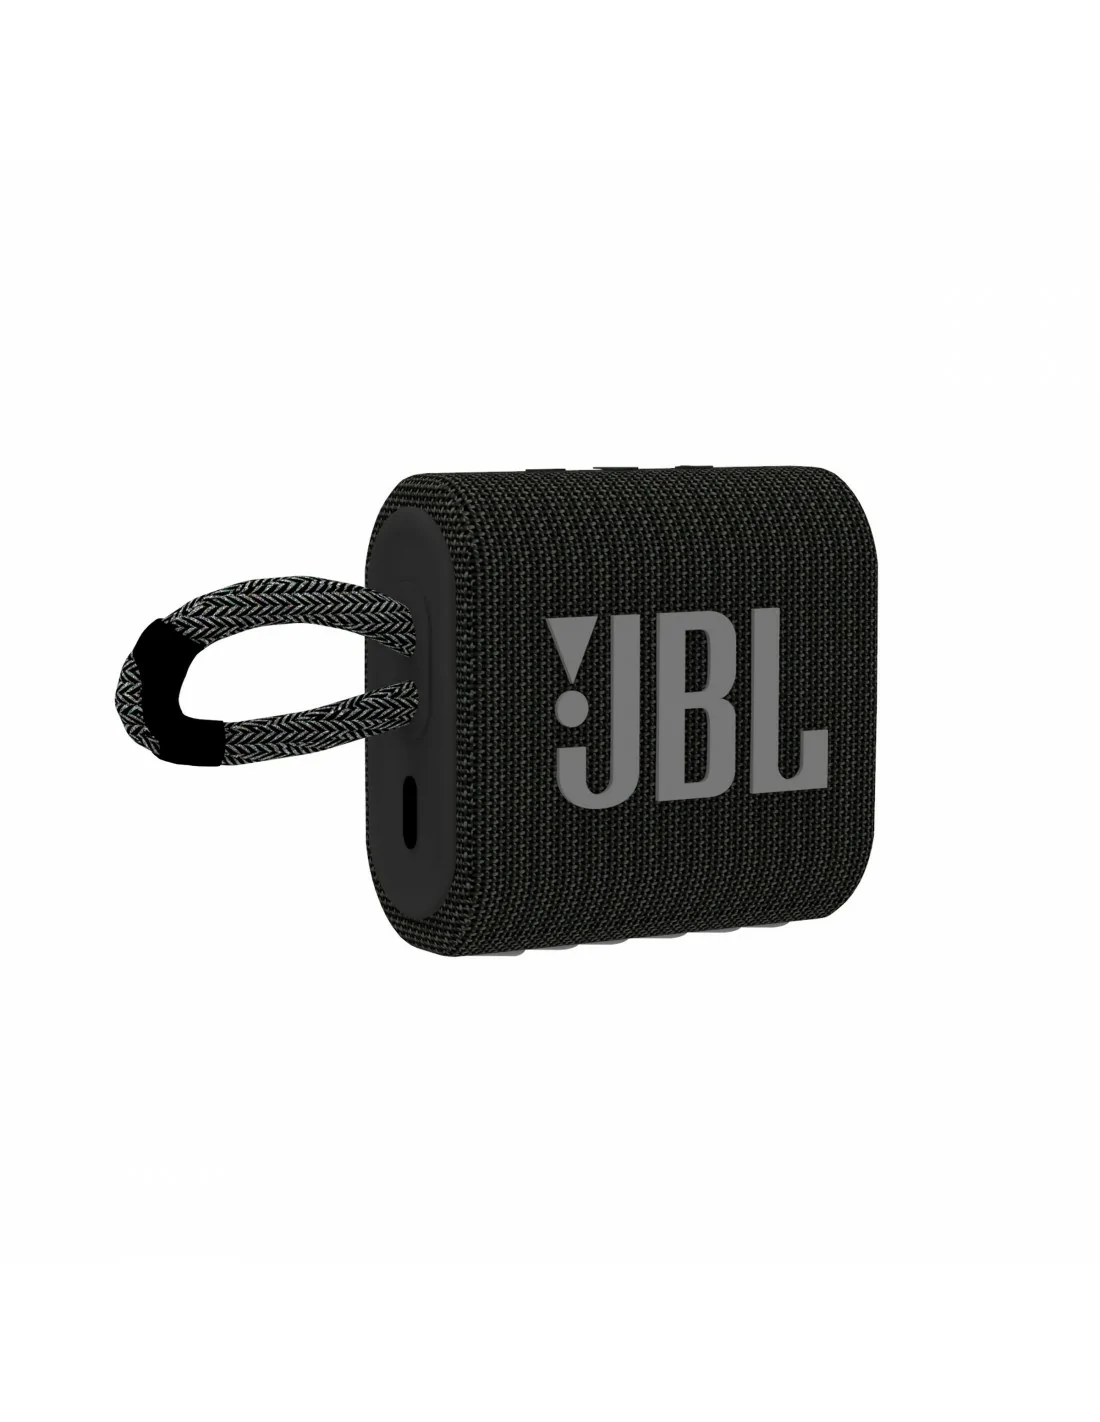 Altavoz Bluetooth JBL Go 3 Rojo - Altavoces Bluetooth - Los